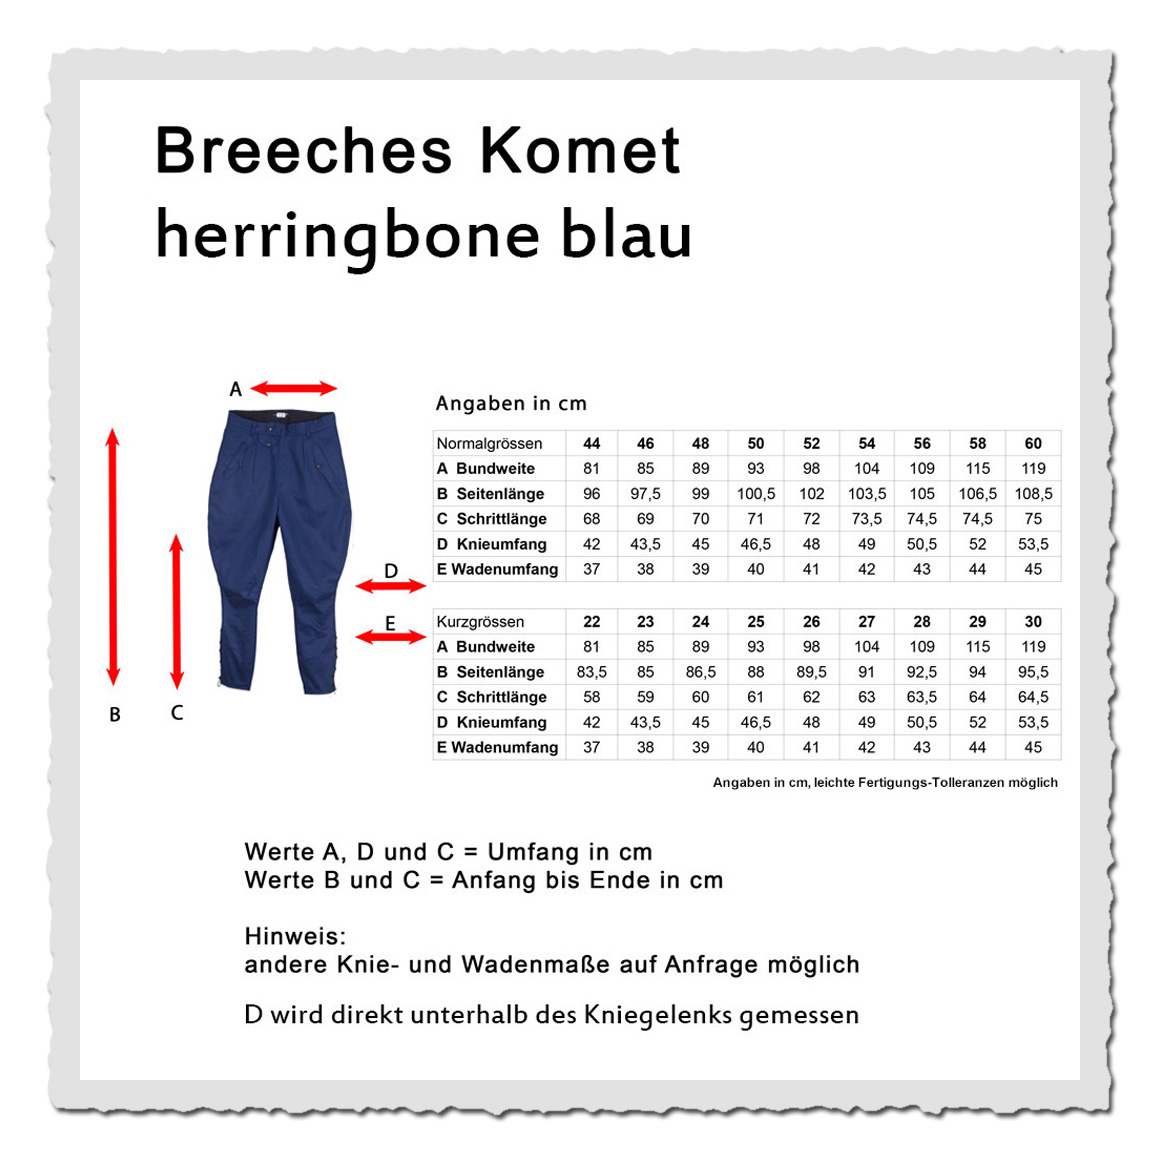 Breeches Komet herringbone blau